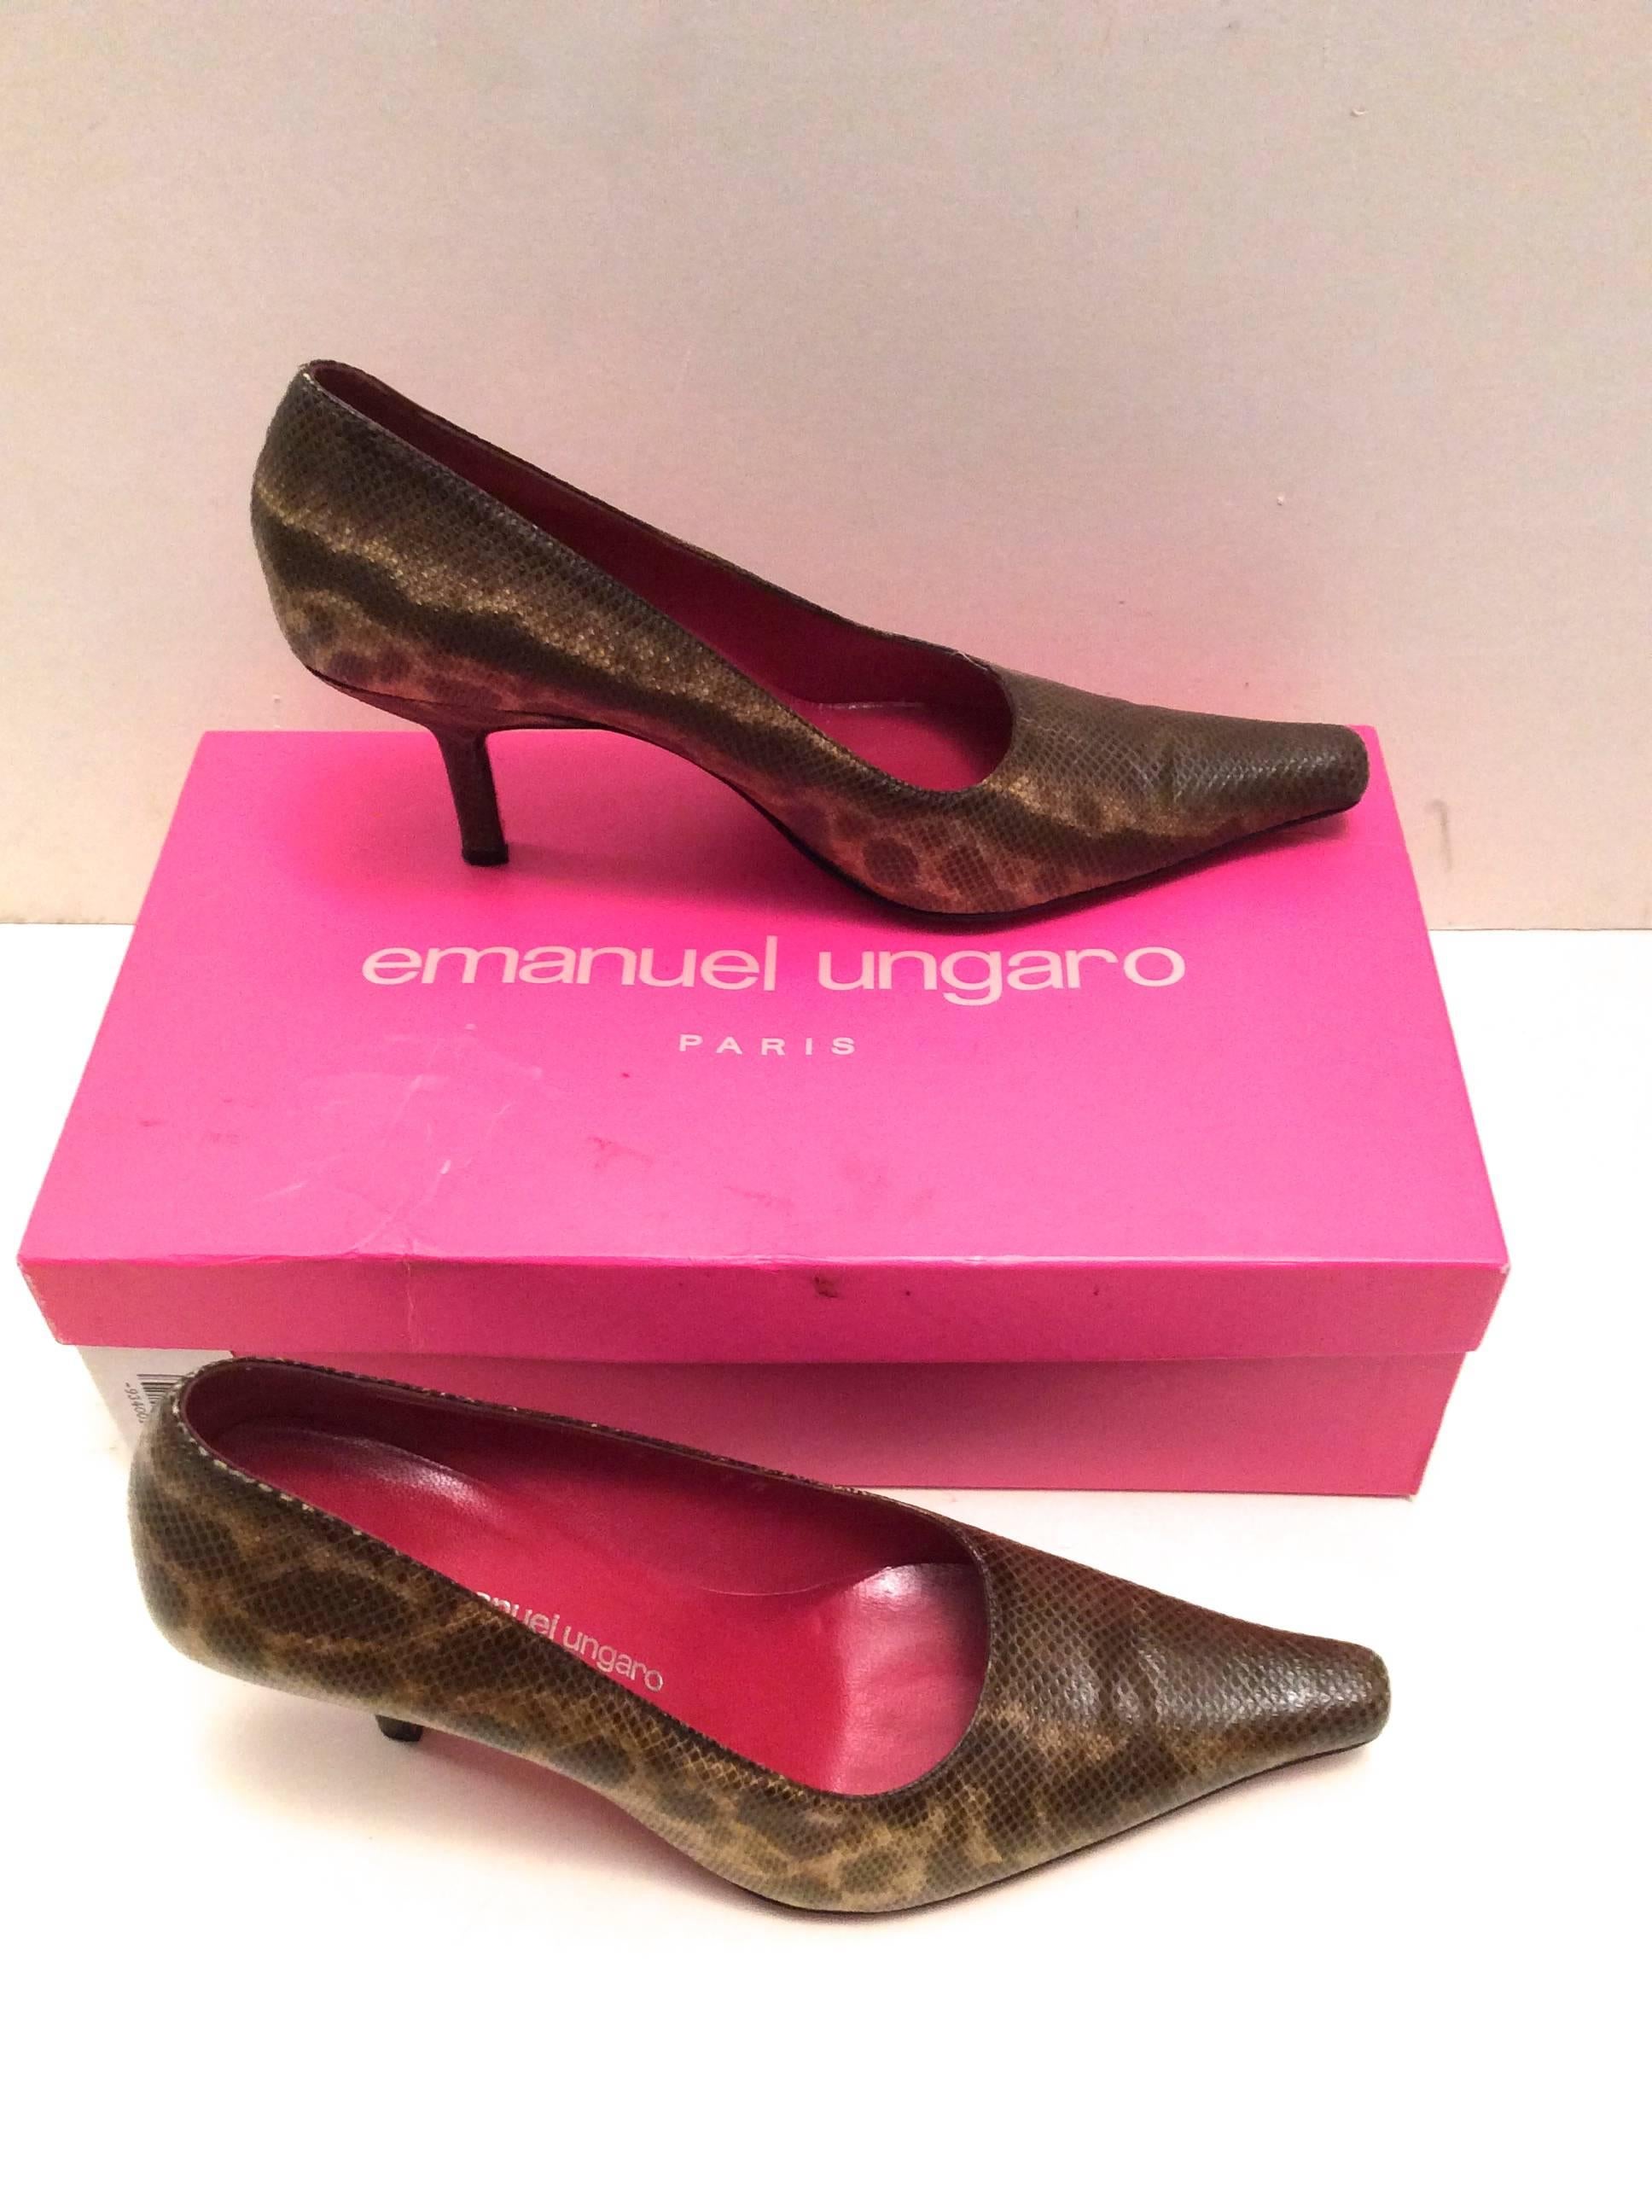 1980's Emanuel Ungaro Shoes - Original Box In Excellent Condition For Sale In Boca Raton, FL